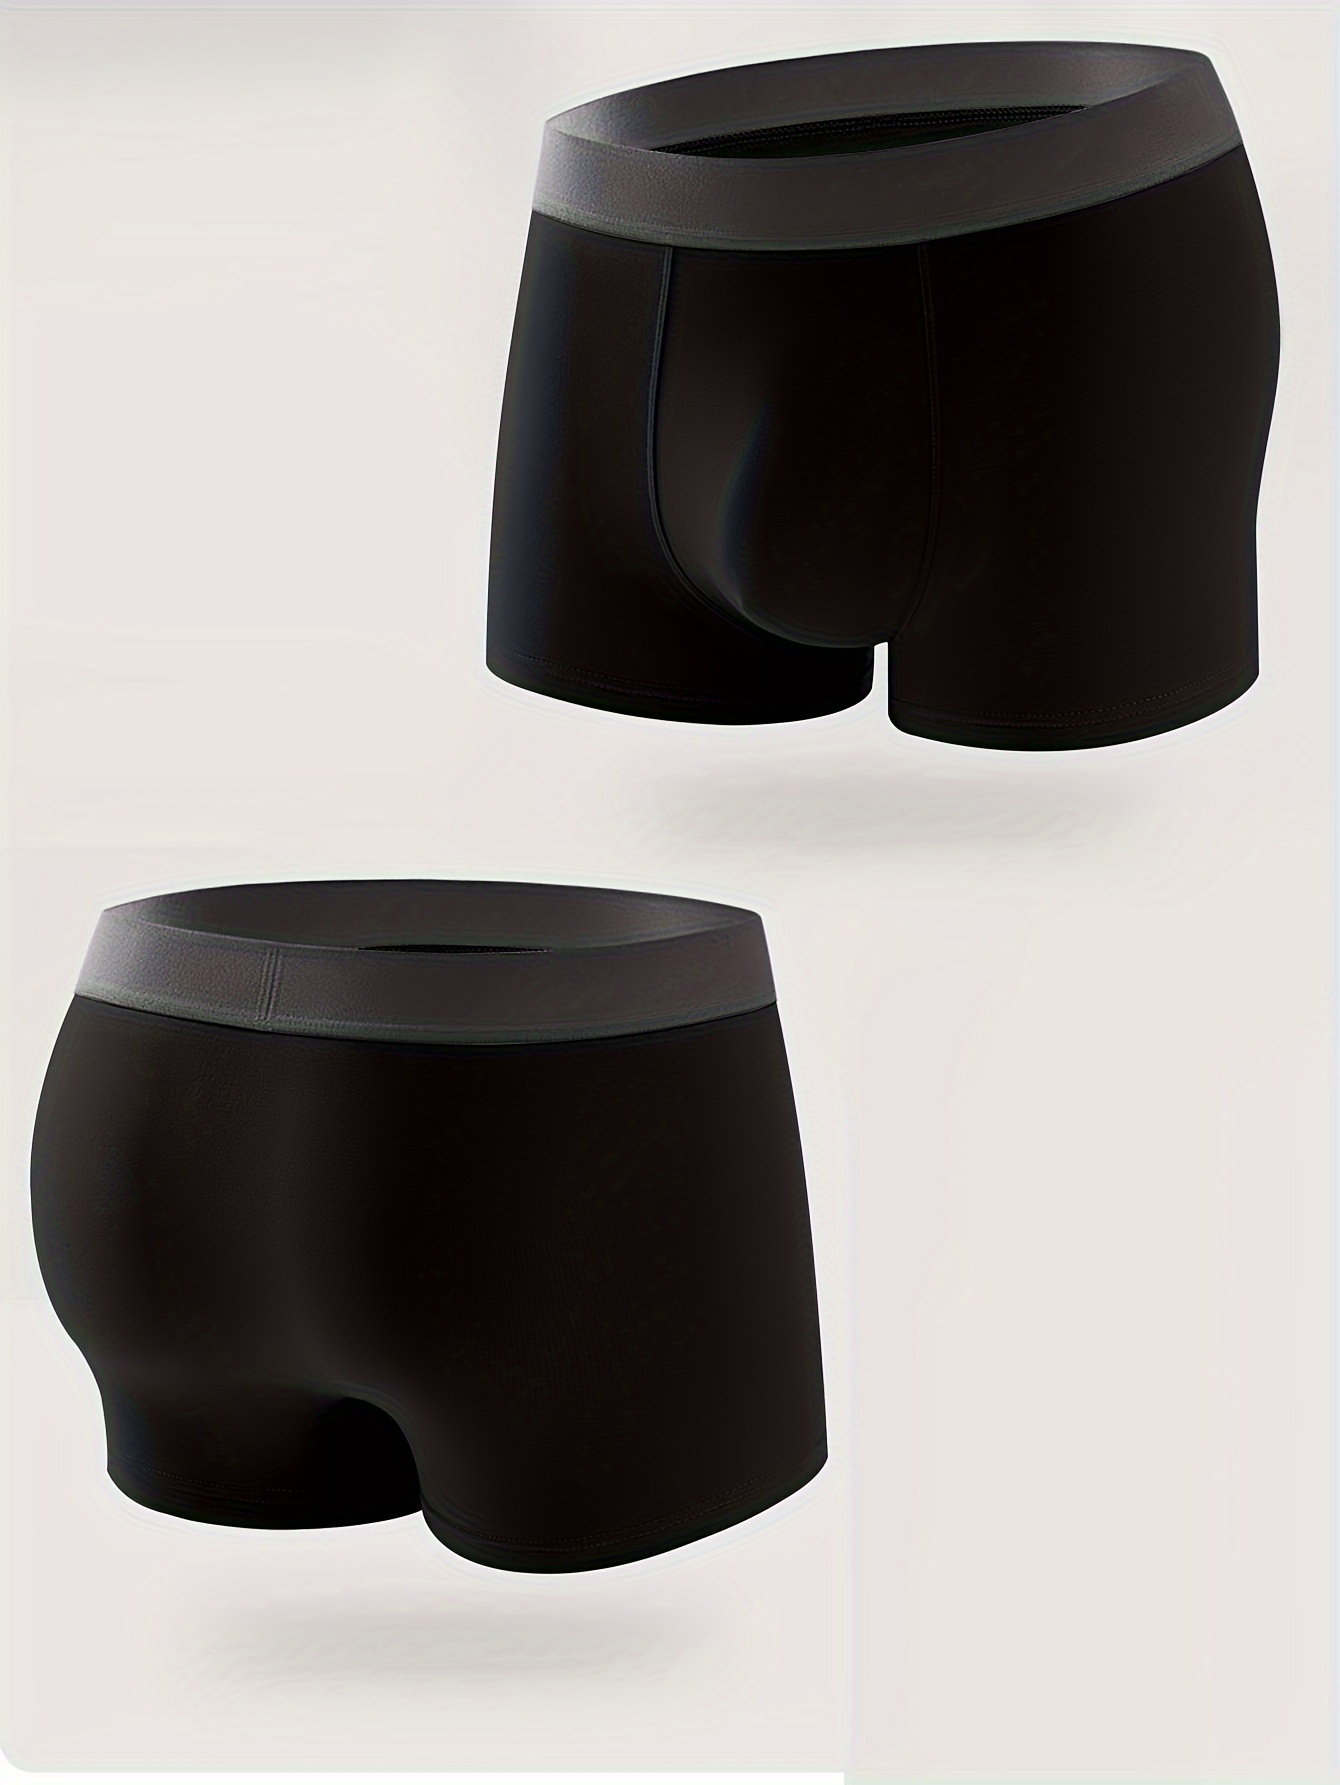 Men's 3-Pack Logo Print Jersey Boxers - Men's Underwear & Socks